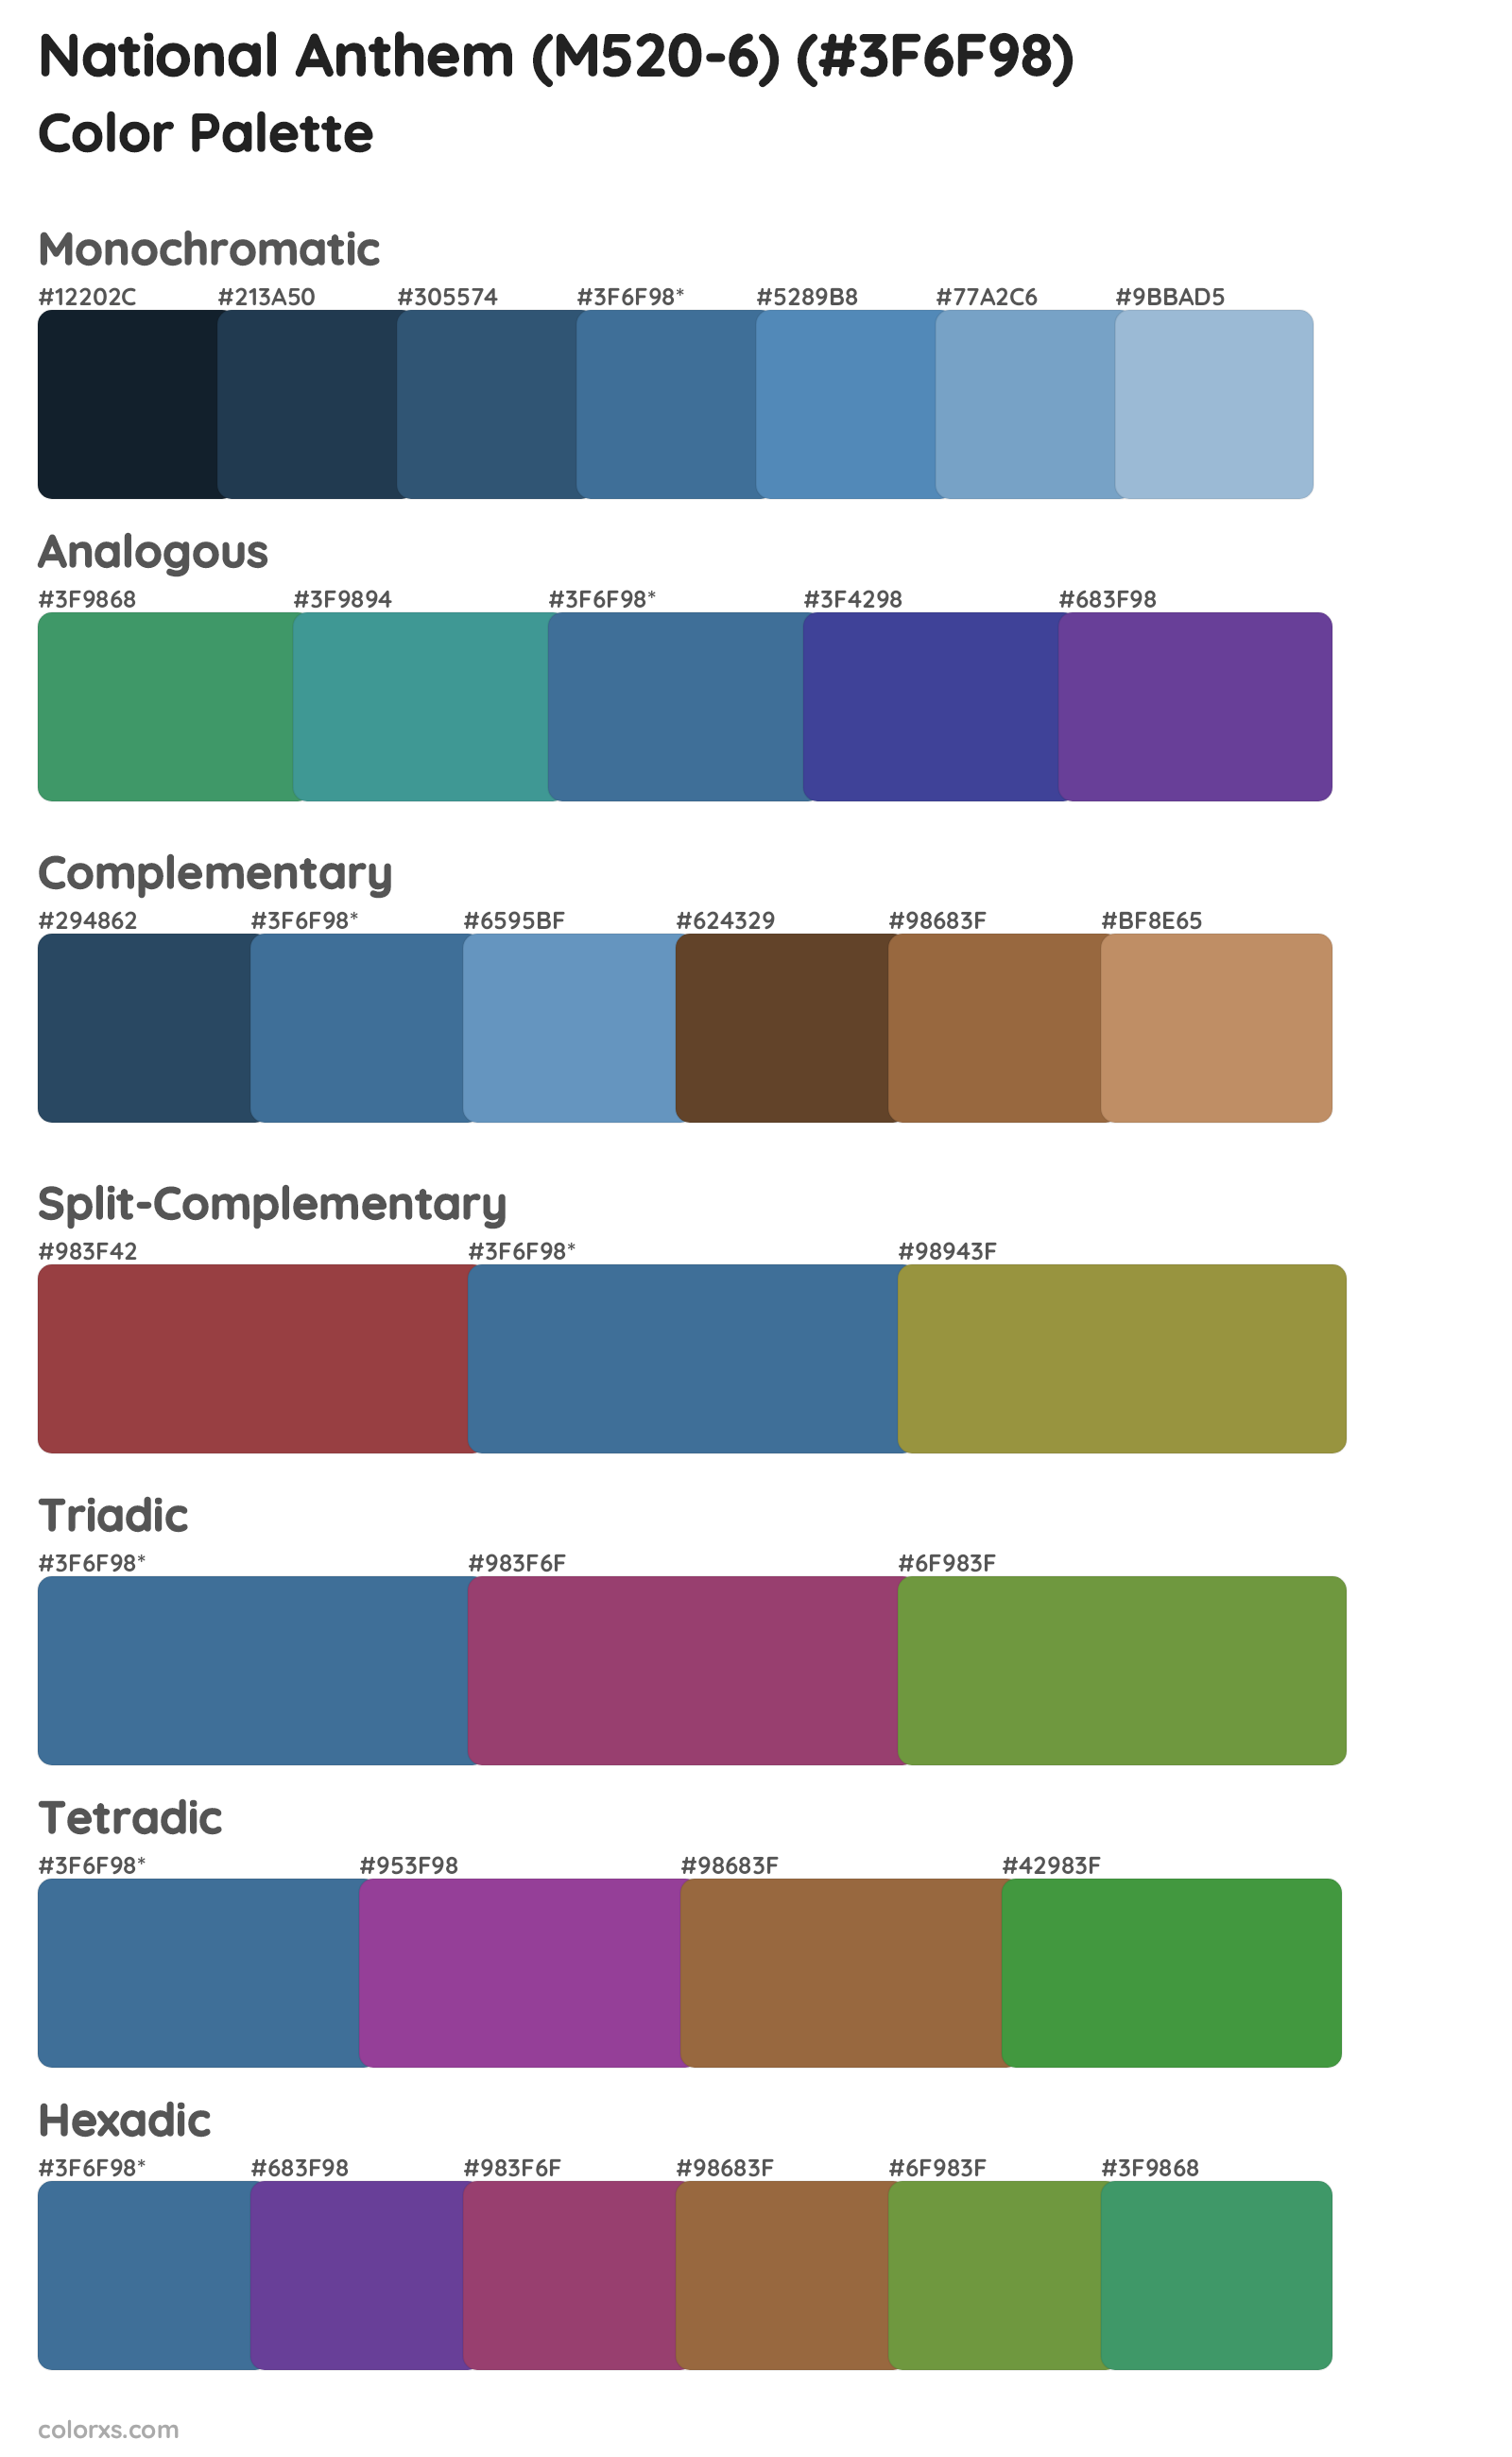 National Anthem (M520-6) Color Scheme Palettes